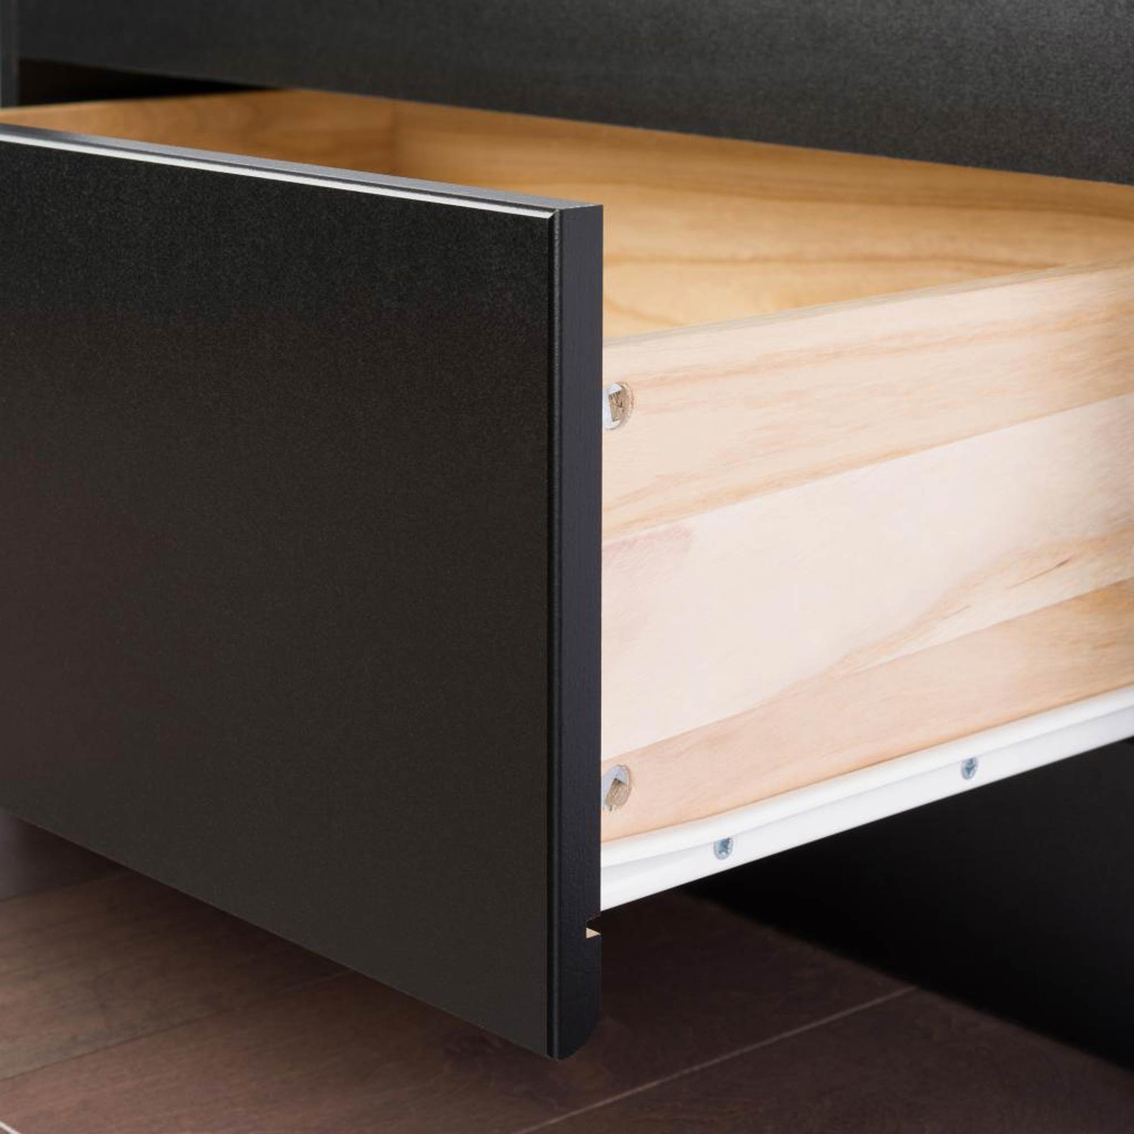 Prepac Full Mate's Platform Storage Bed - Image 4 of 4